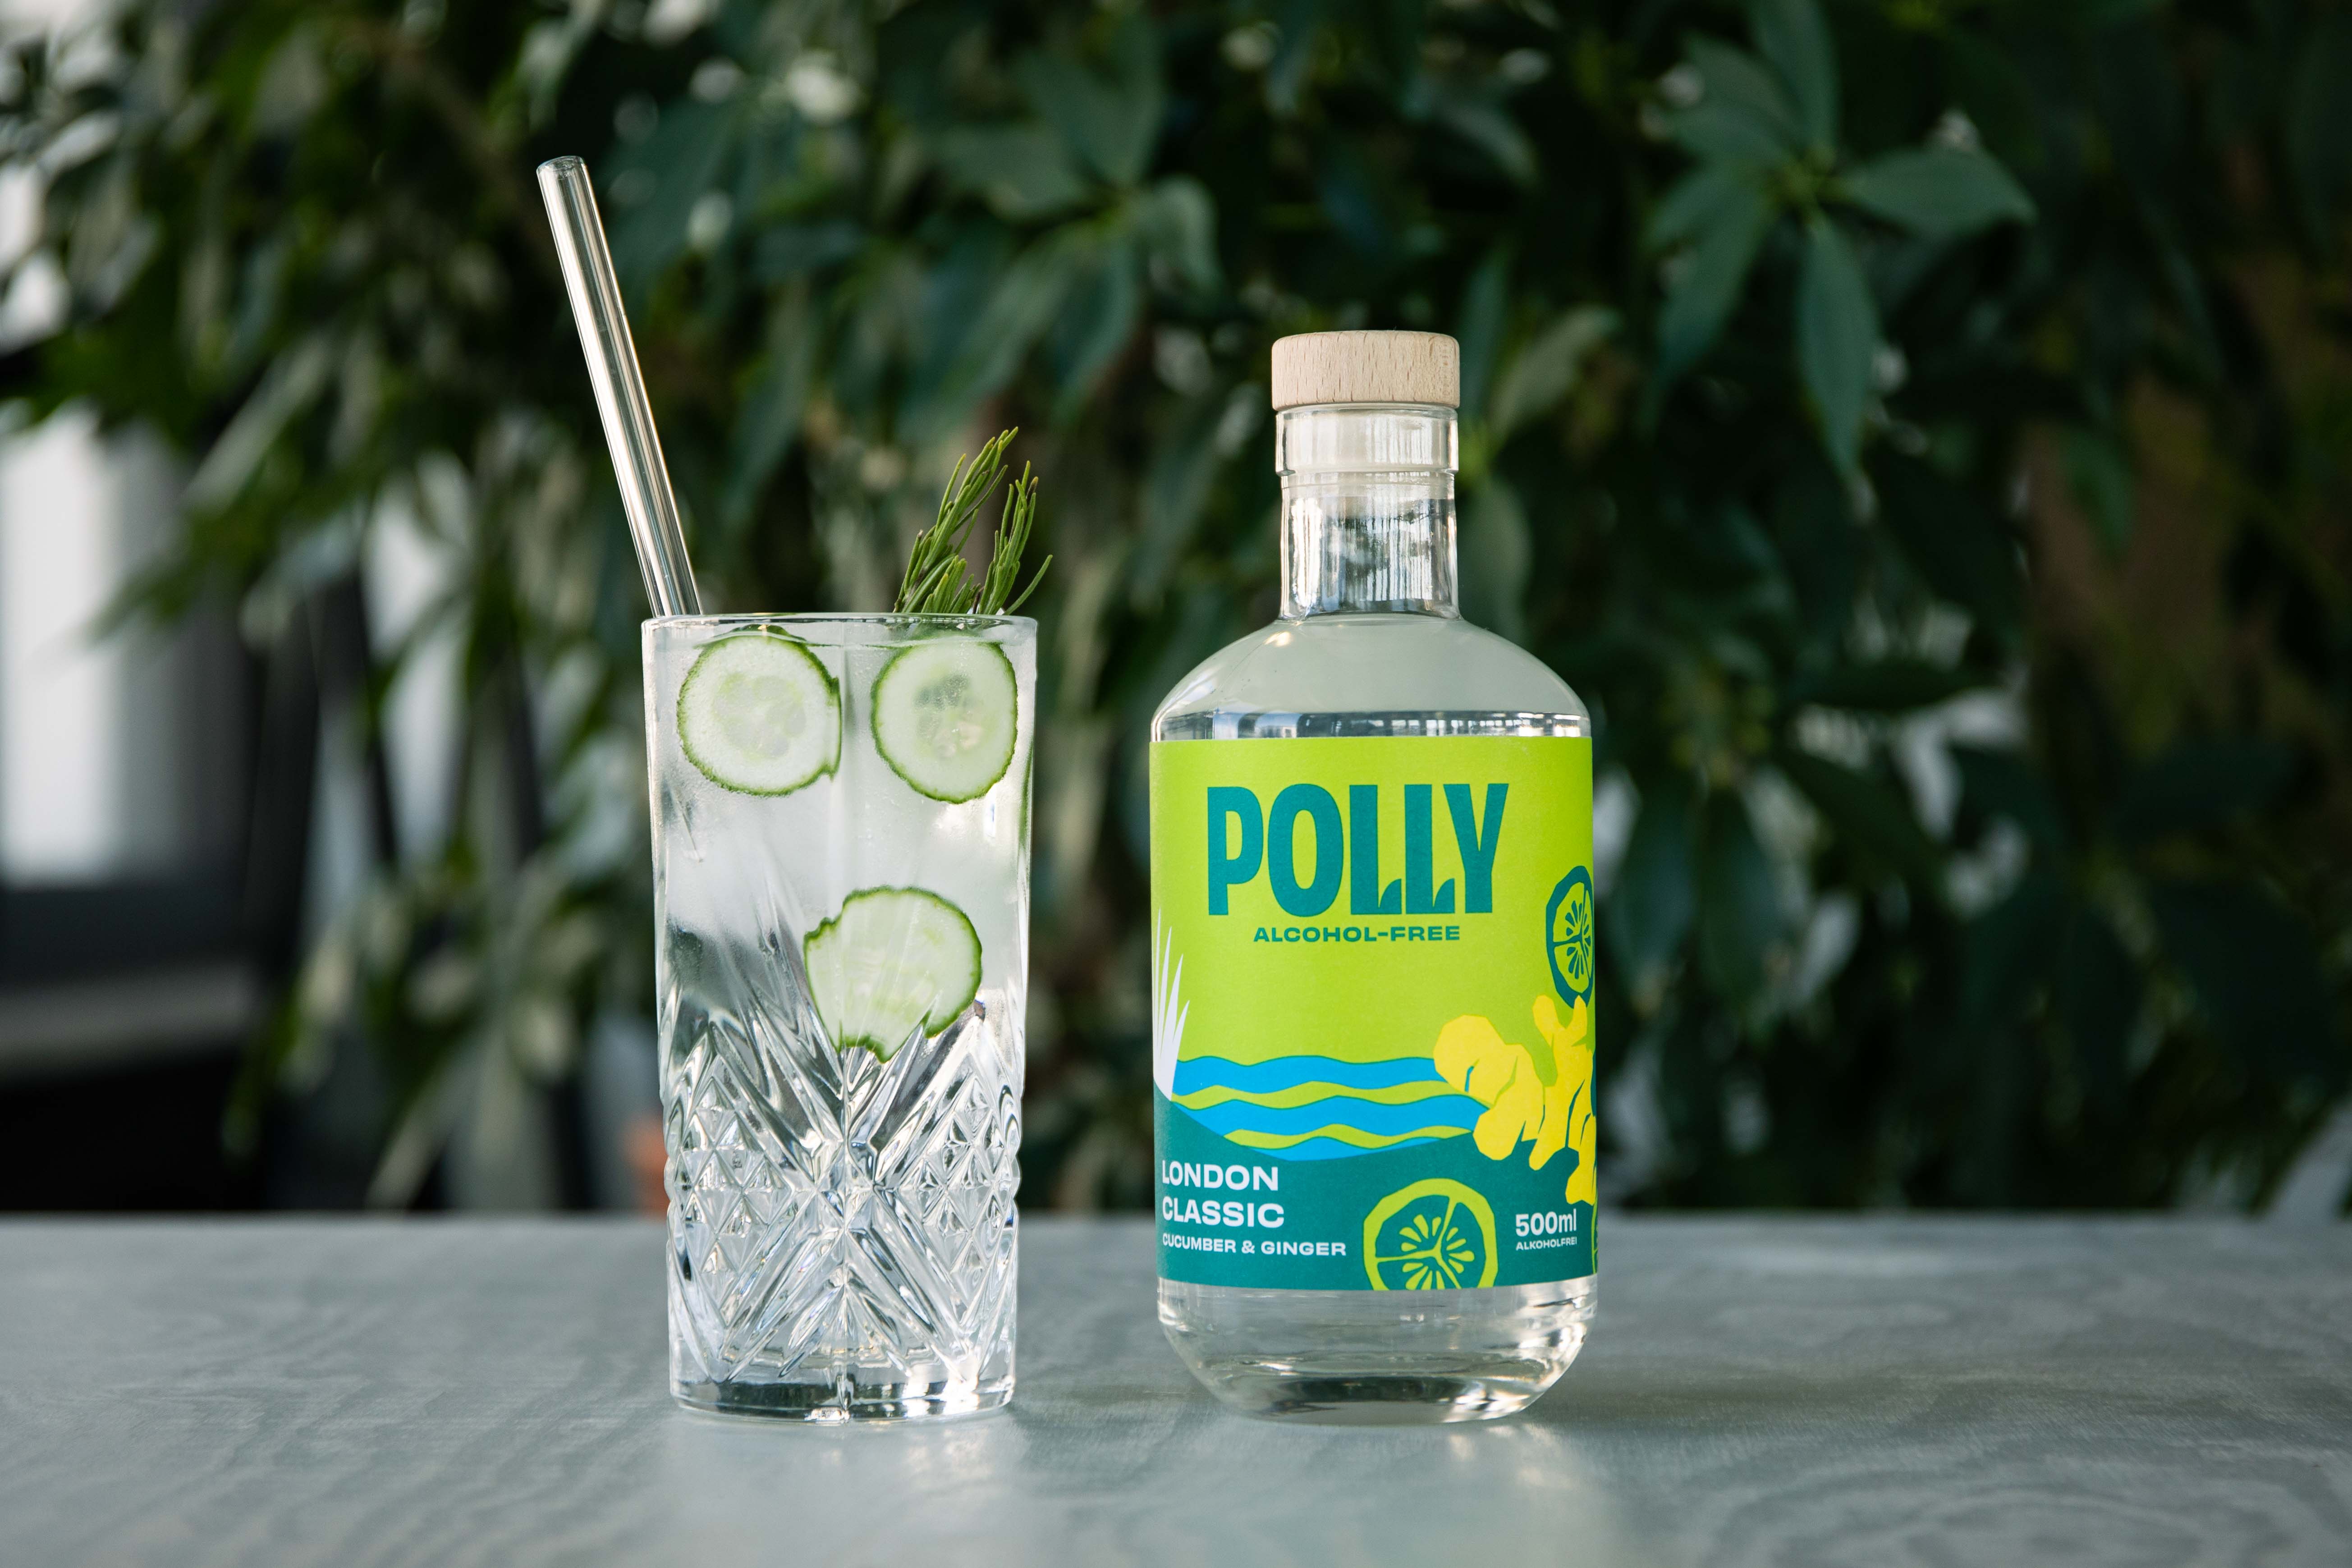 Polly - London Classic - alkoholfrei 0,5l 0,0%vol.